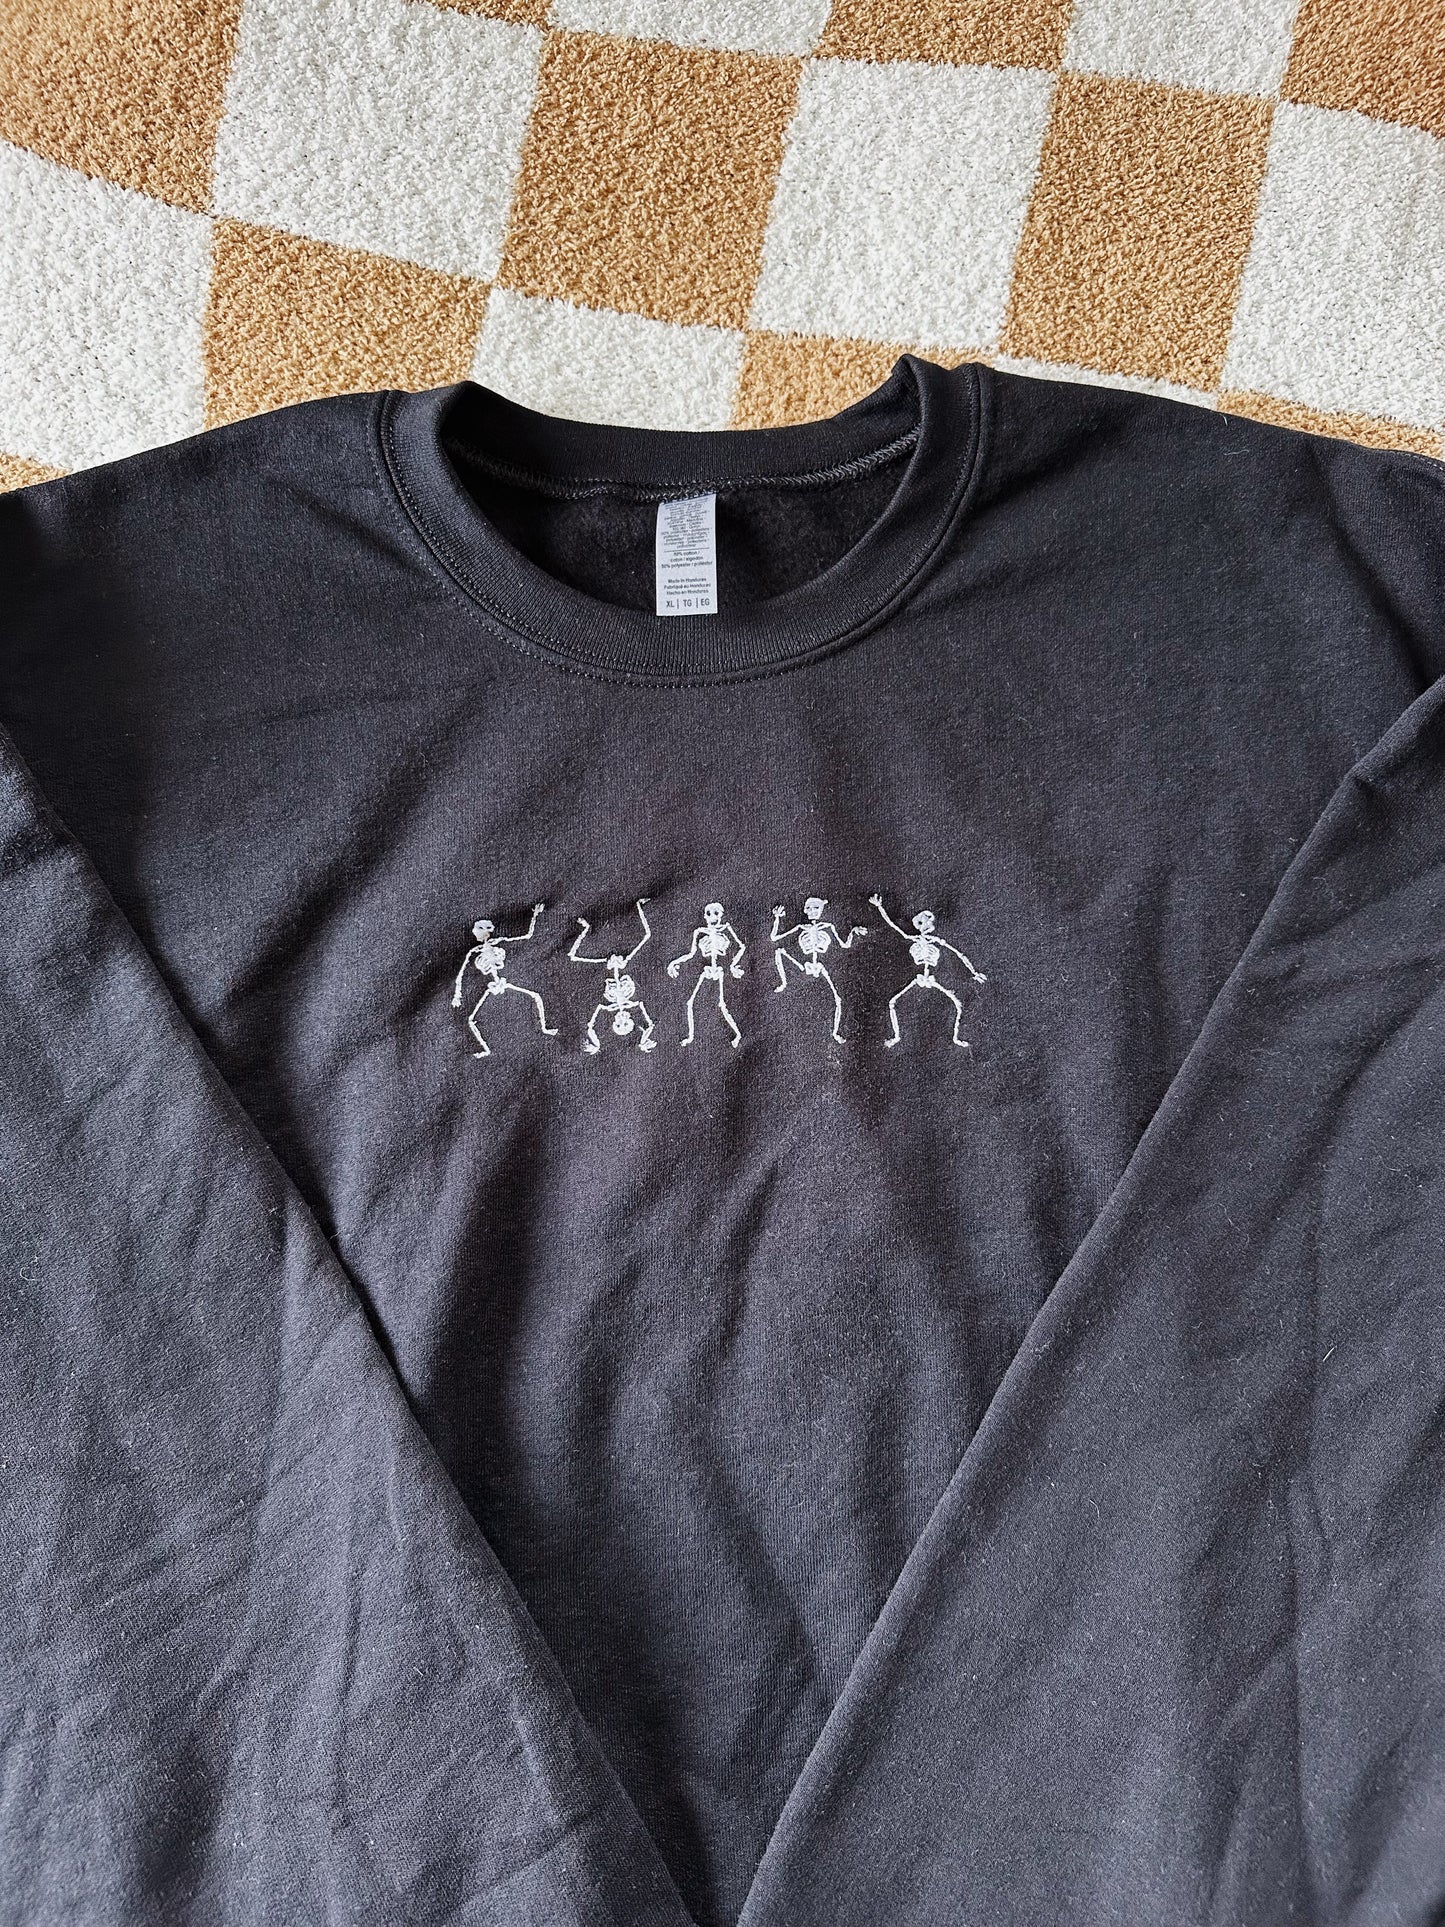 Dancing Skeletons - Embroidered Sweatshirt